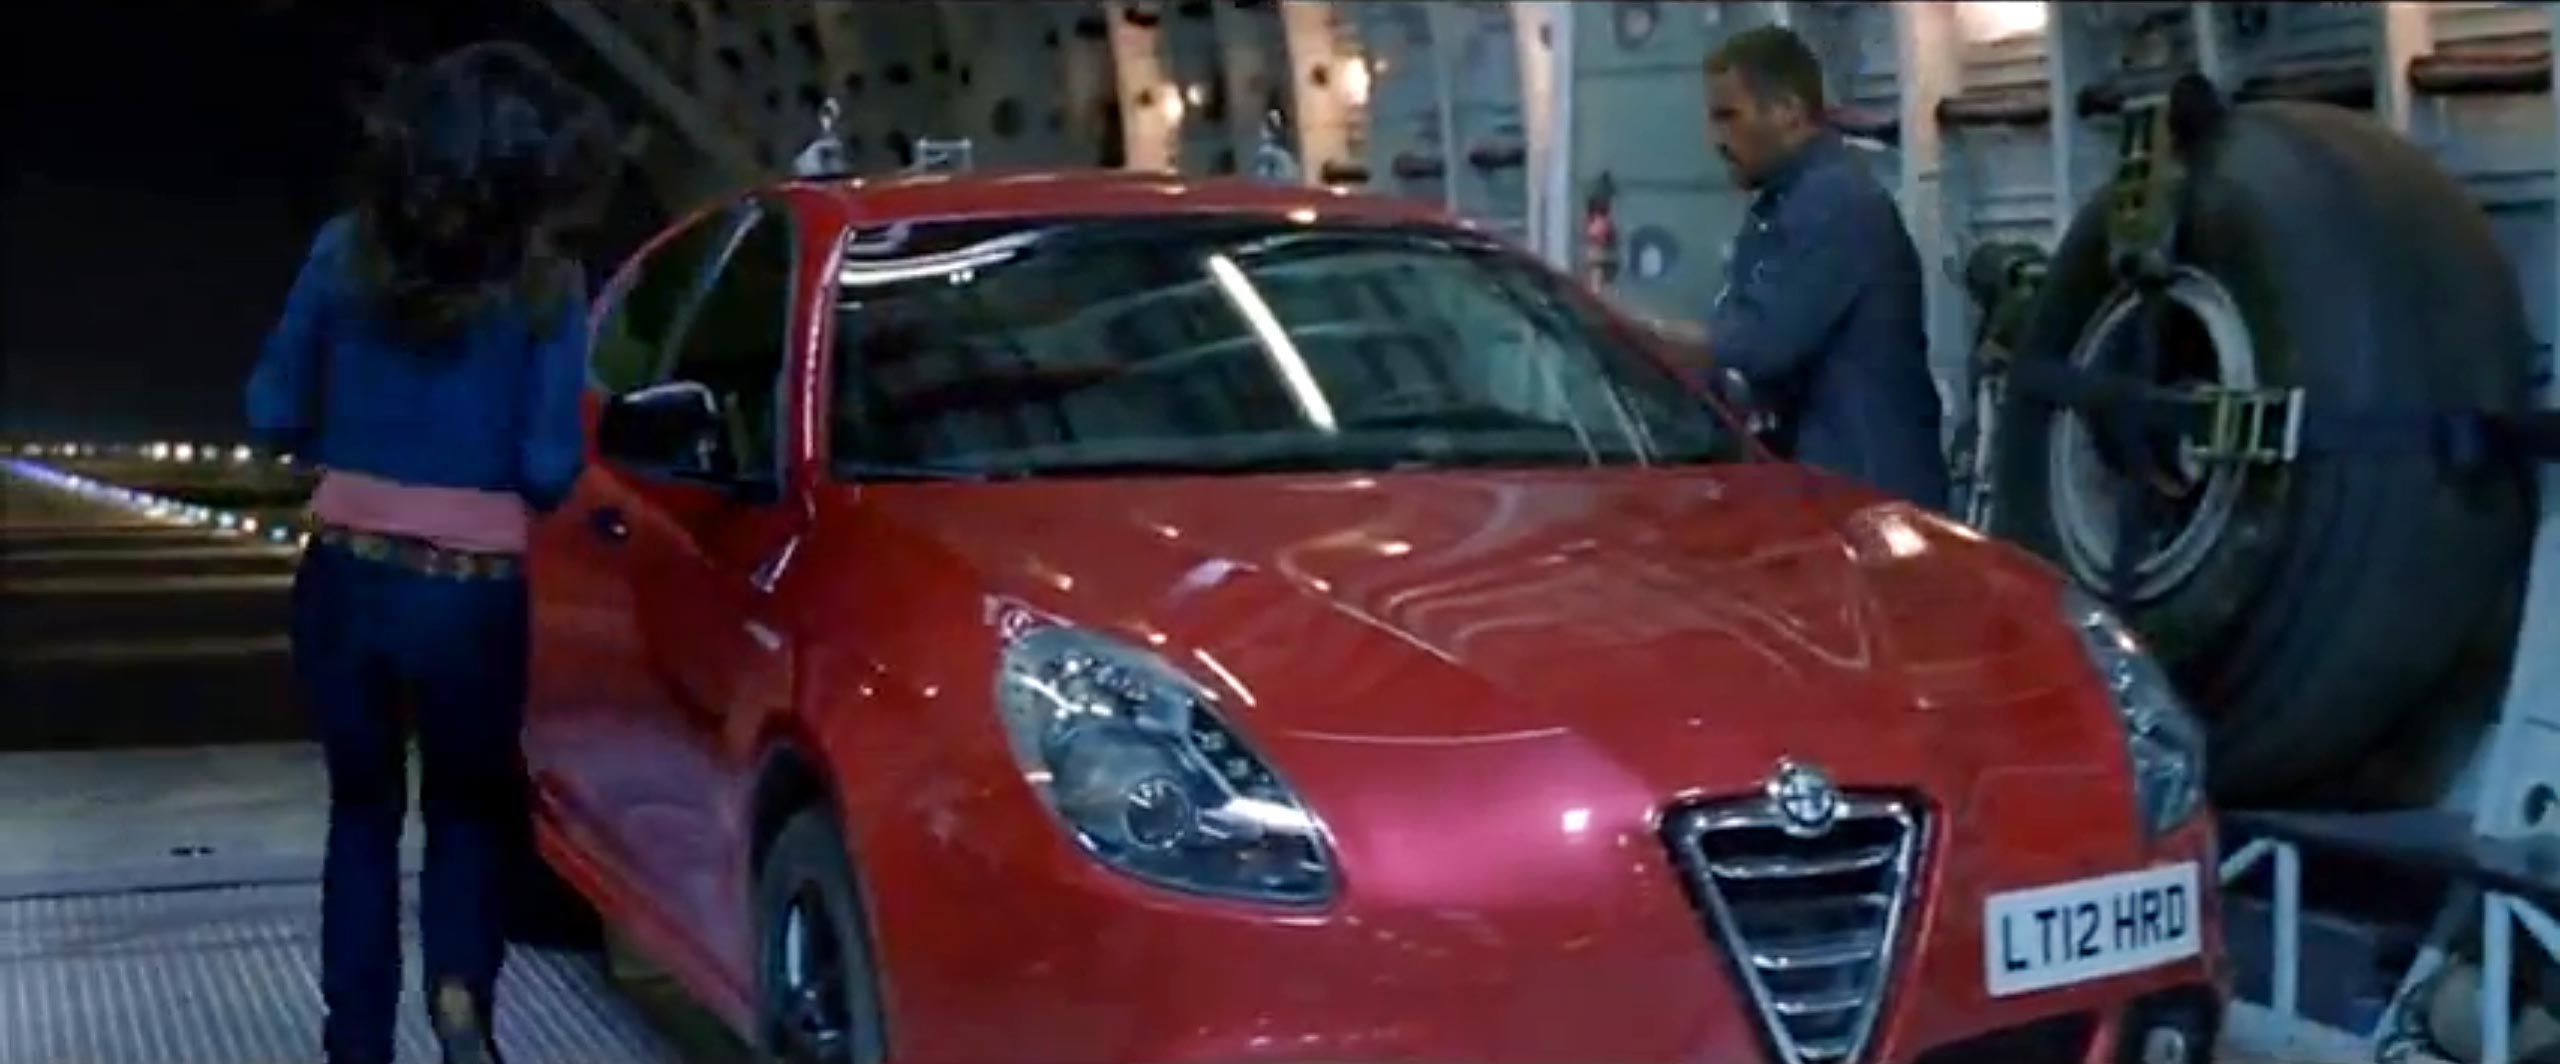 Alfa Romeo, Iklan mobil Alfa Romeo Giulietta bertema film Fast and Furious 6: Iklan Alfa Romeo Giulietta yang Bertema Fast & Furious 6